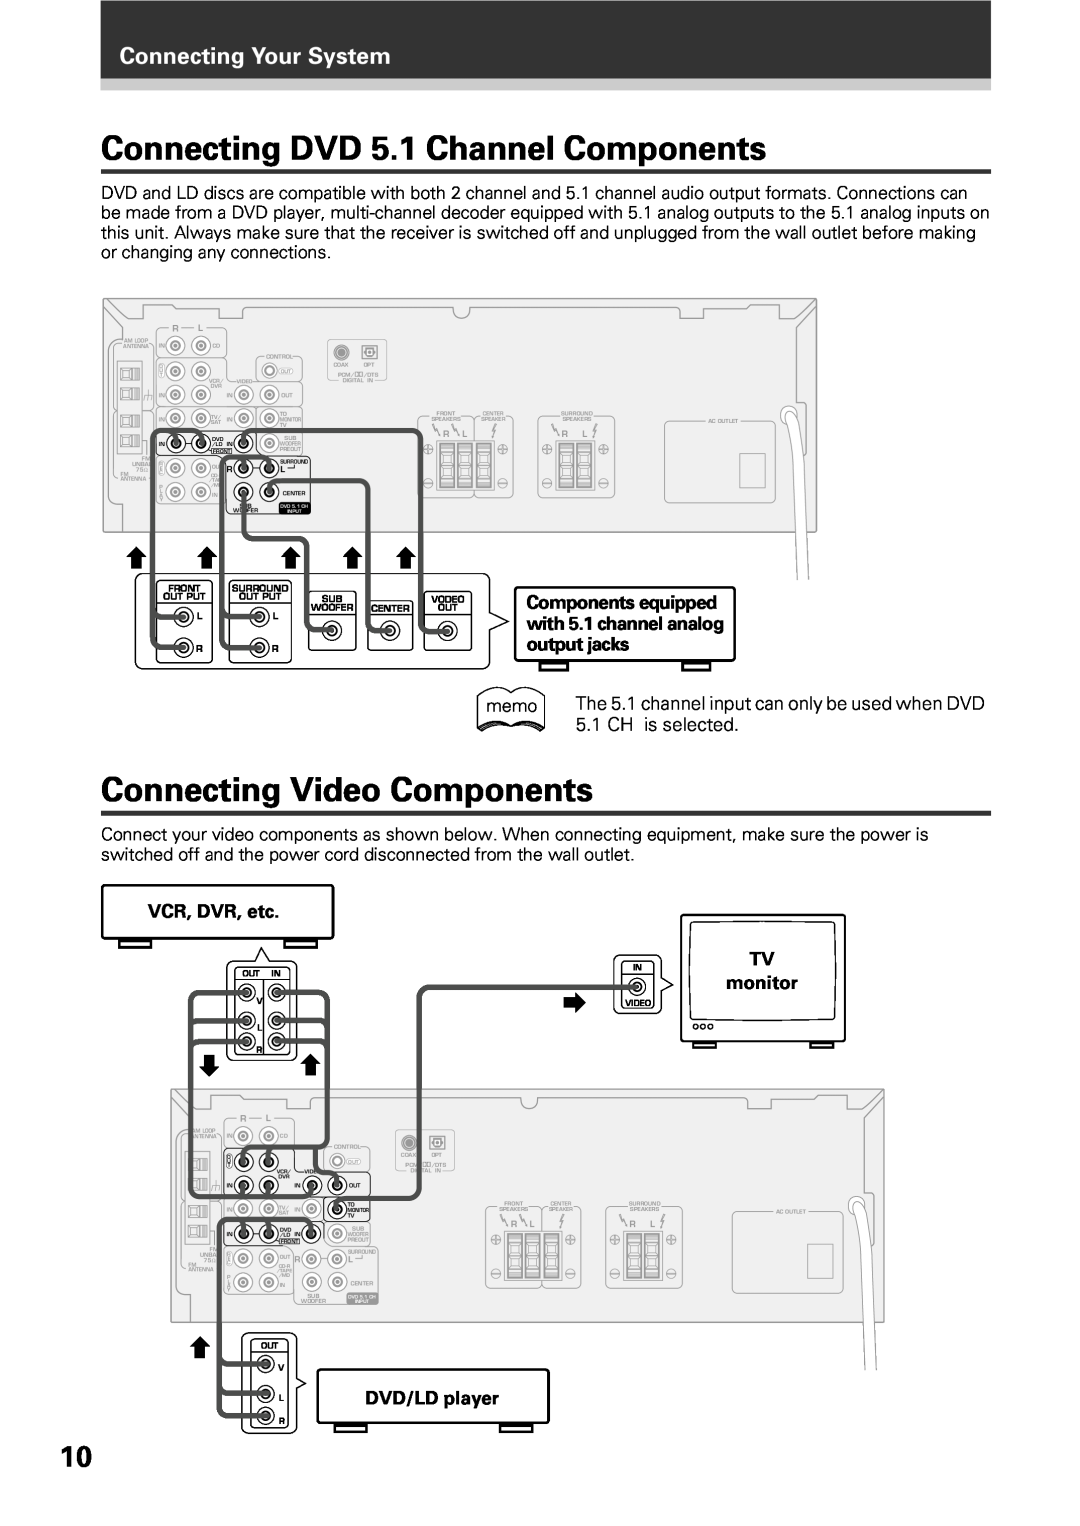 Pioneer VSX-D309 Connecting DVD 5.1 Channel Components, Connecting Video Components, Connecting Your System, VCR, DVR, etc 